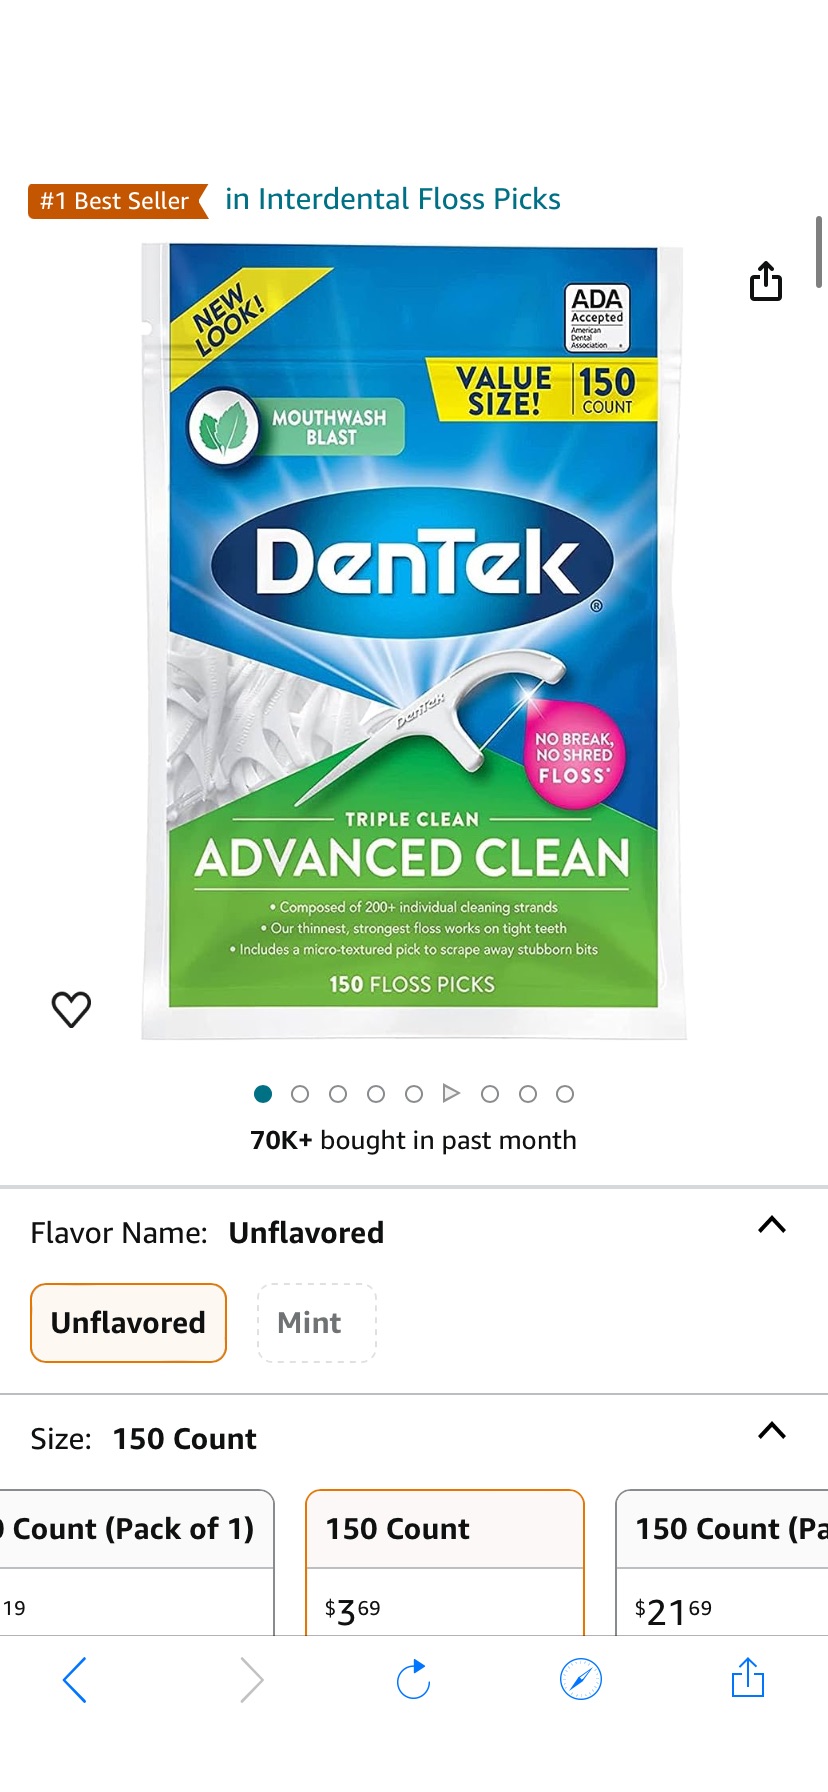 Amazon.com : DenTek Triple Clean Advanced Clean Floss Picks, No Break & No Shred Floss, 150 Count : Flossing Products : Health & Household